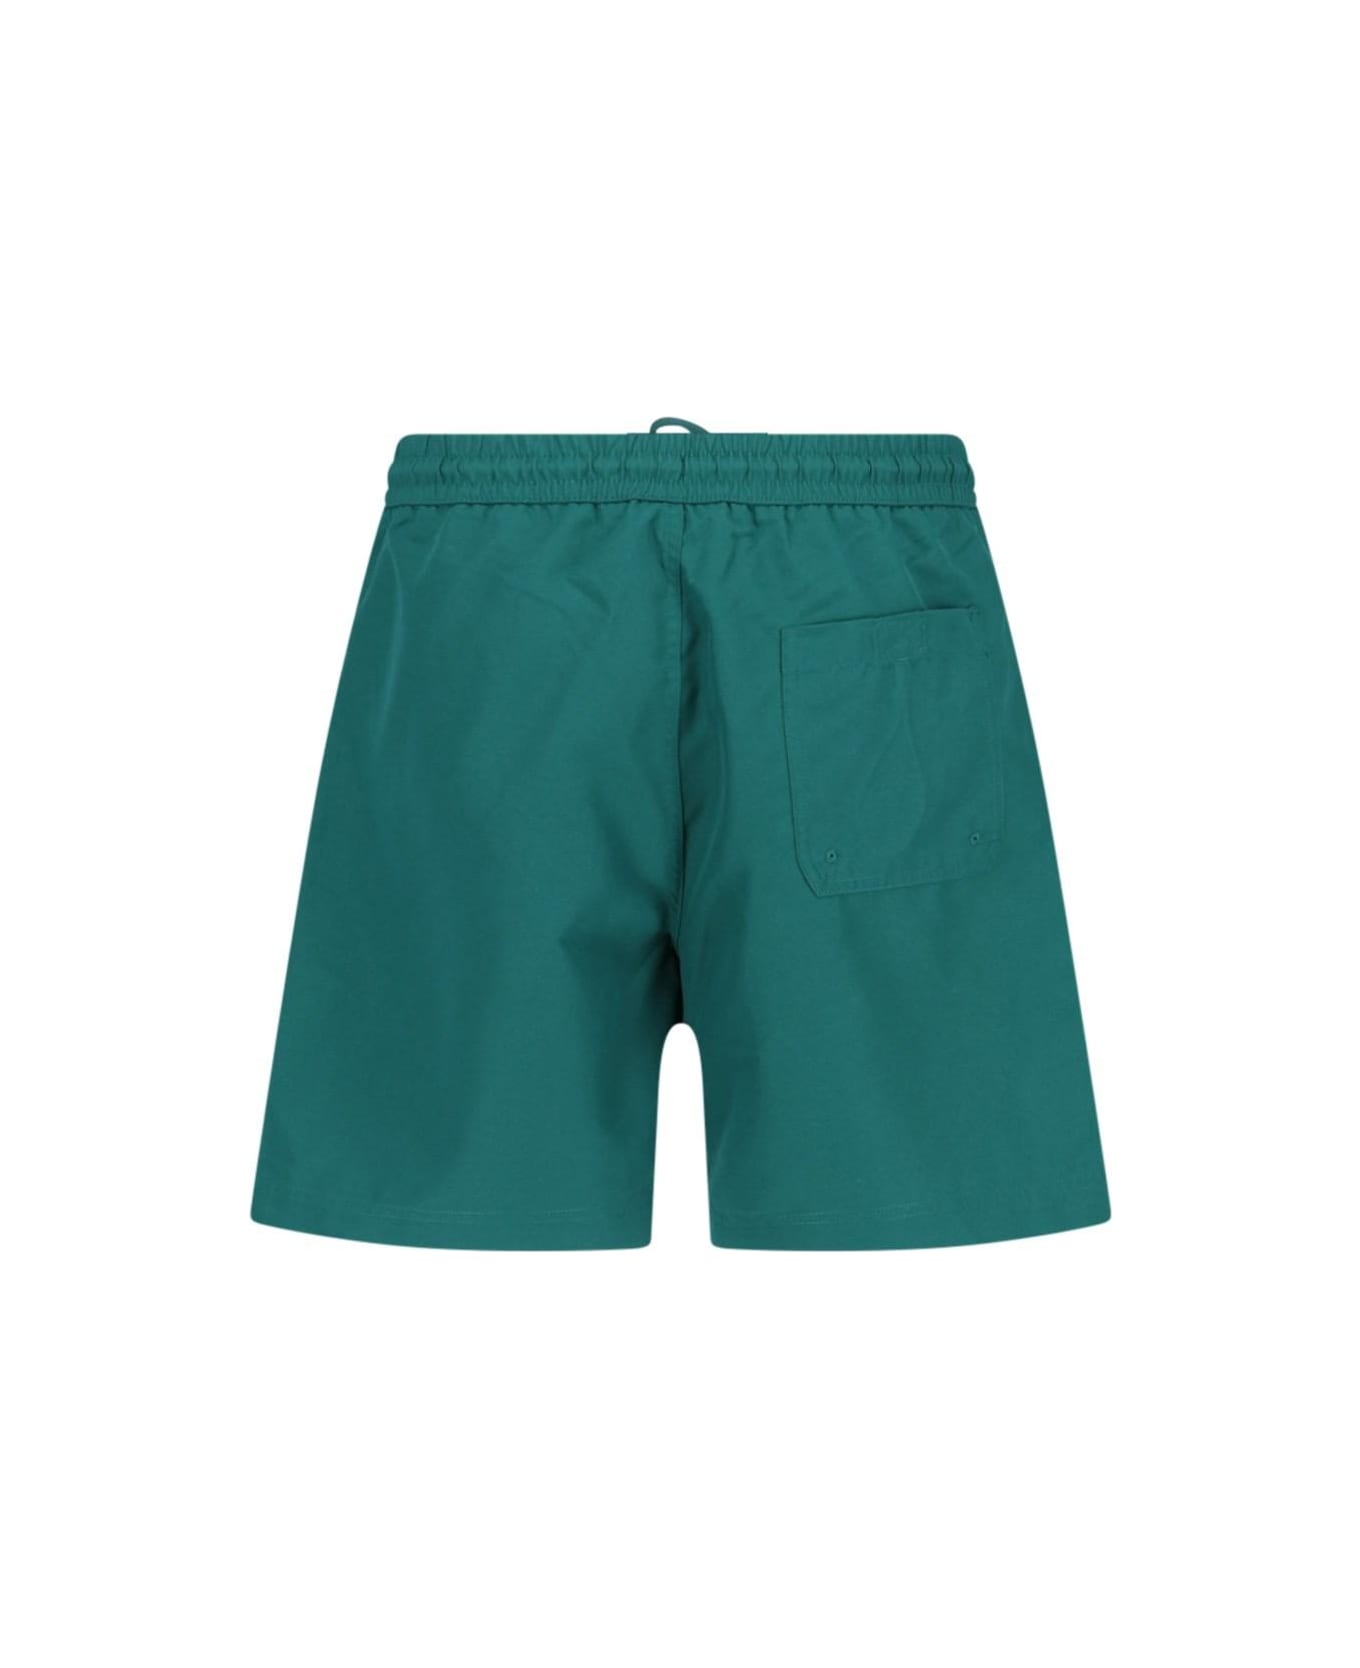 Carhartt 'chase Swim Trunk' Swim Shorts - Green